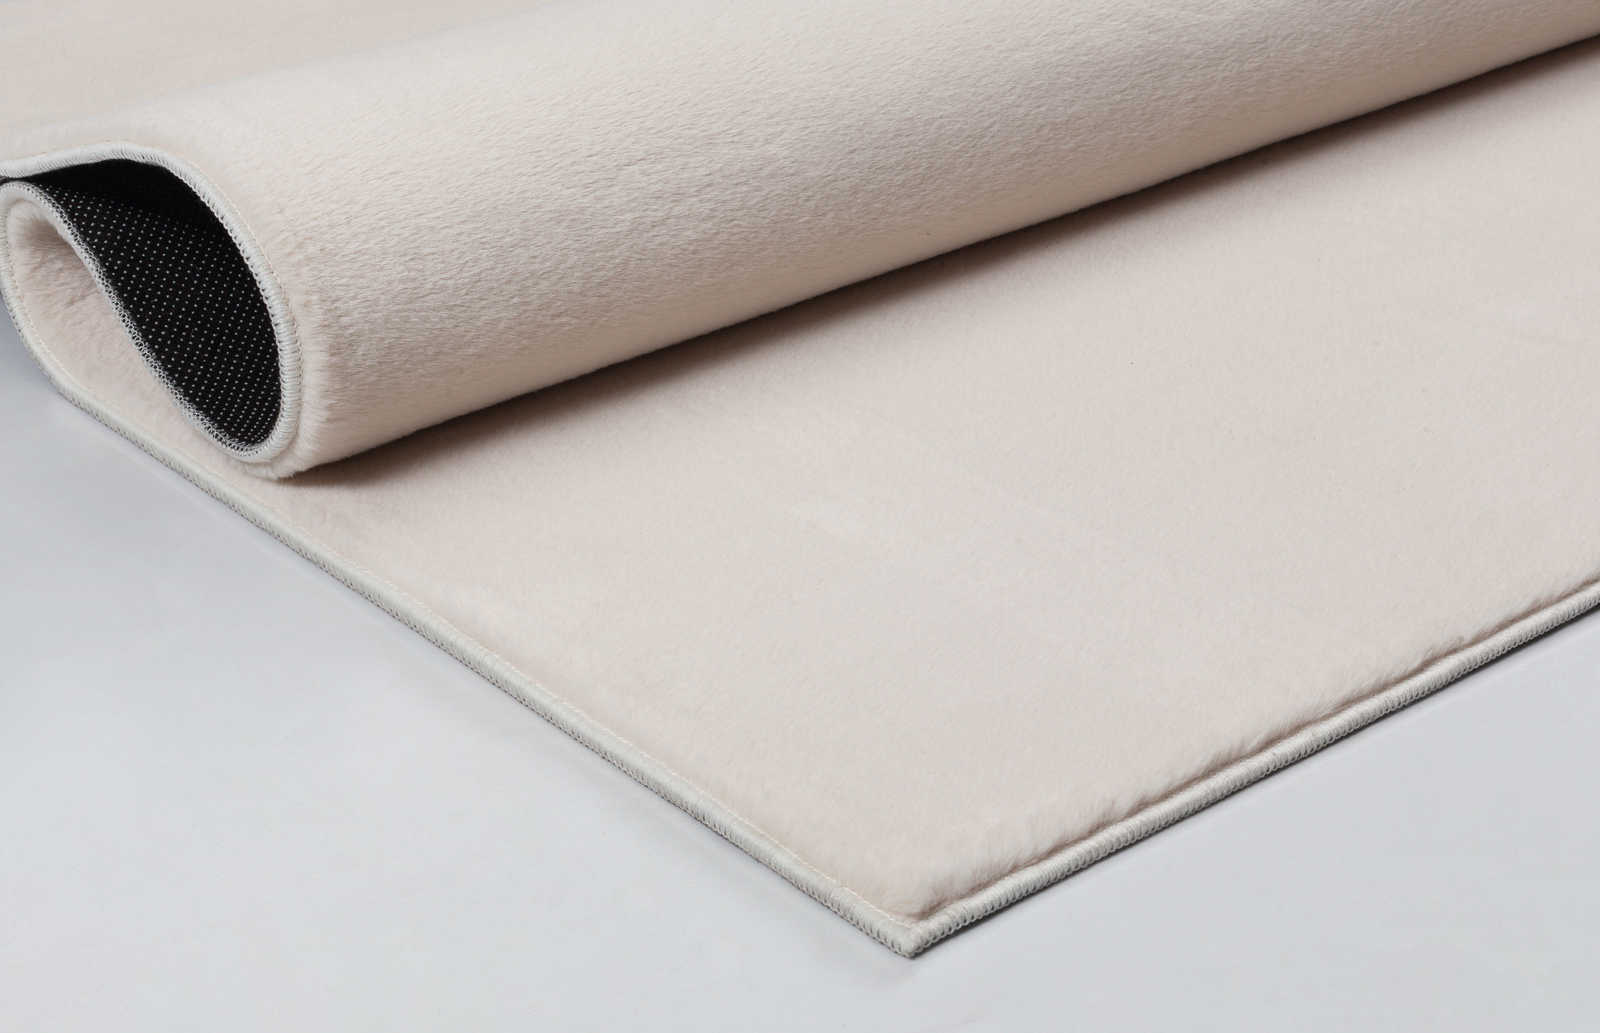             Plain high pile carpet in soft beige - 160 x 117 cm
        